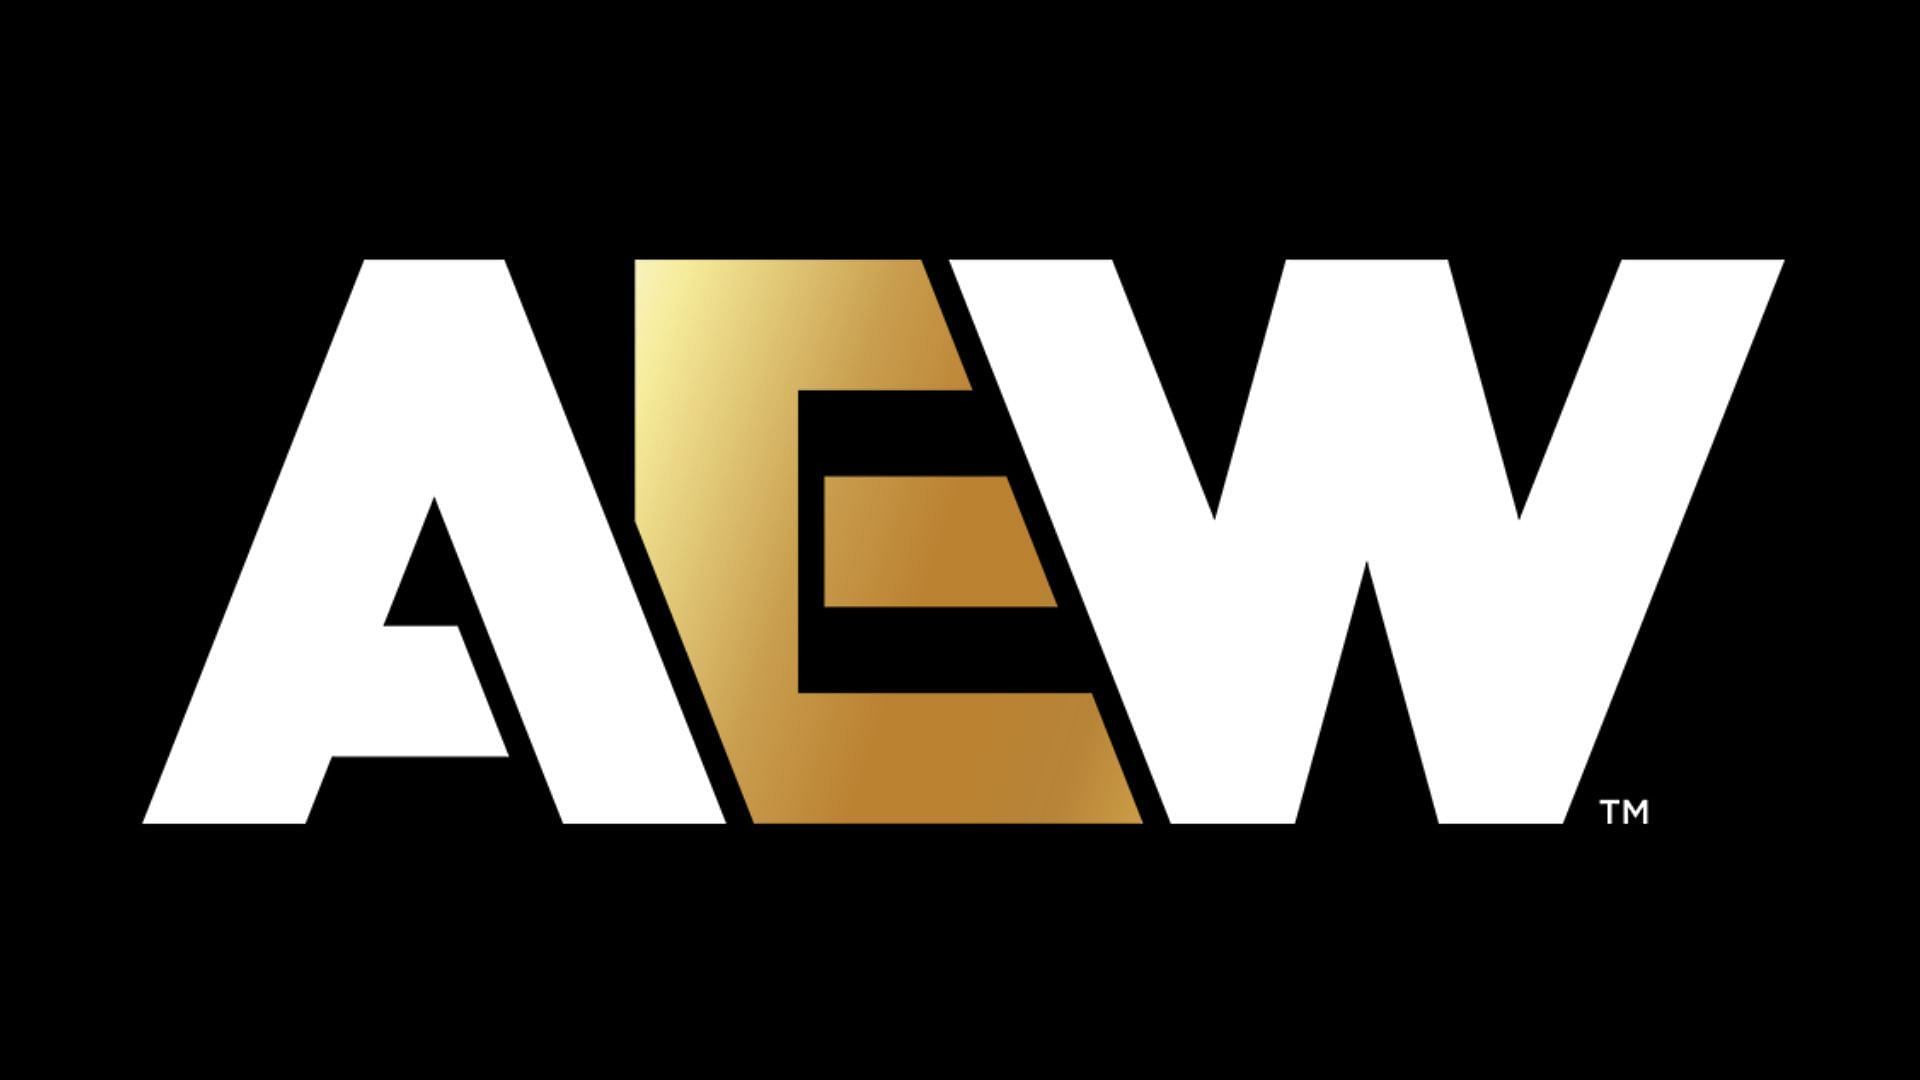 All Elite Wrestling is a Jacksonville-based promotion led by Tony Khan [Logo courtesy of AEW